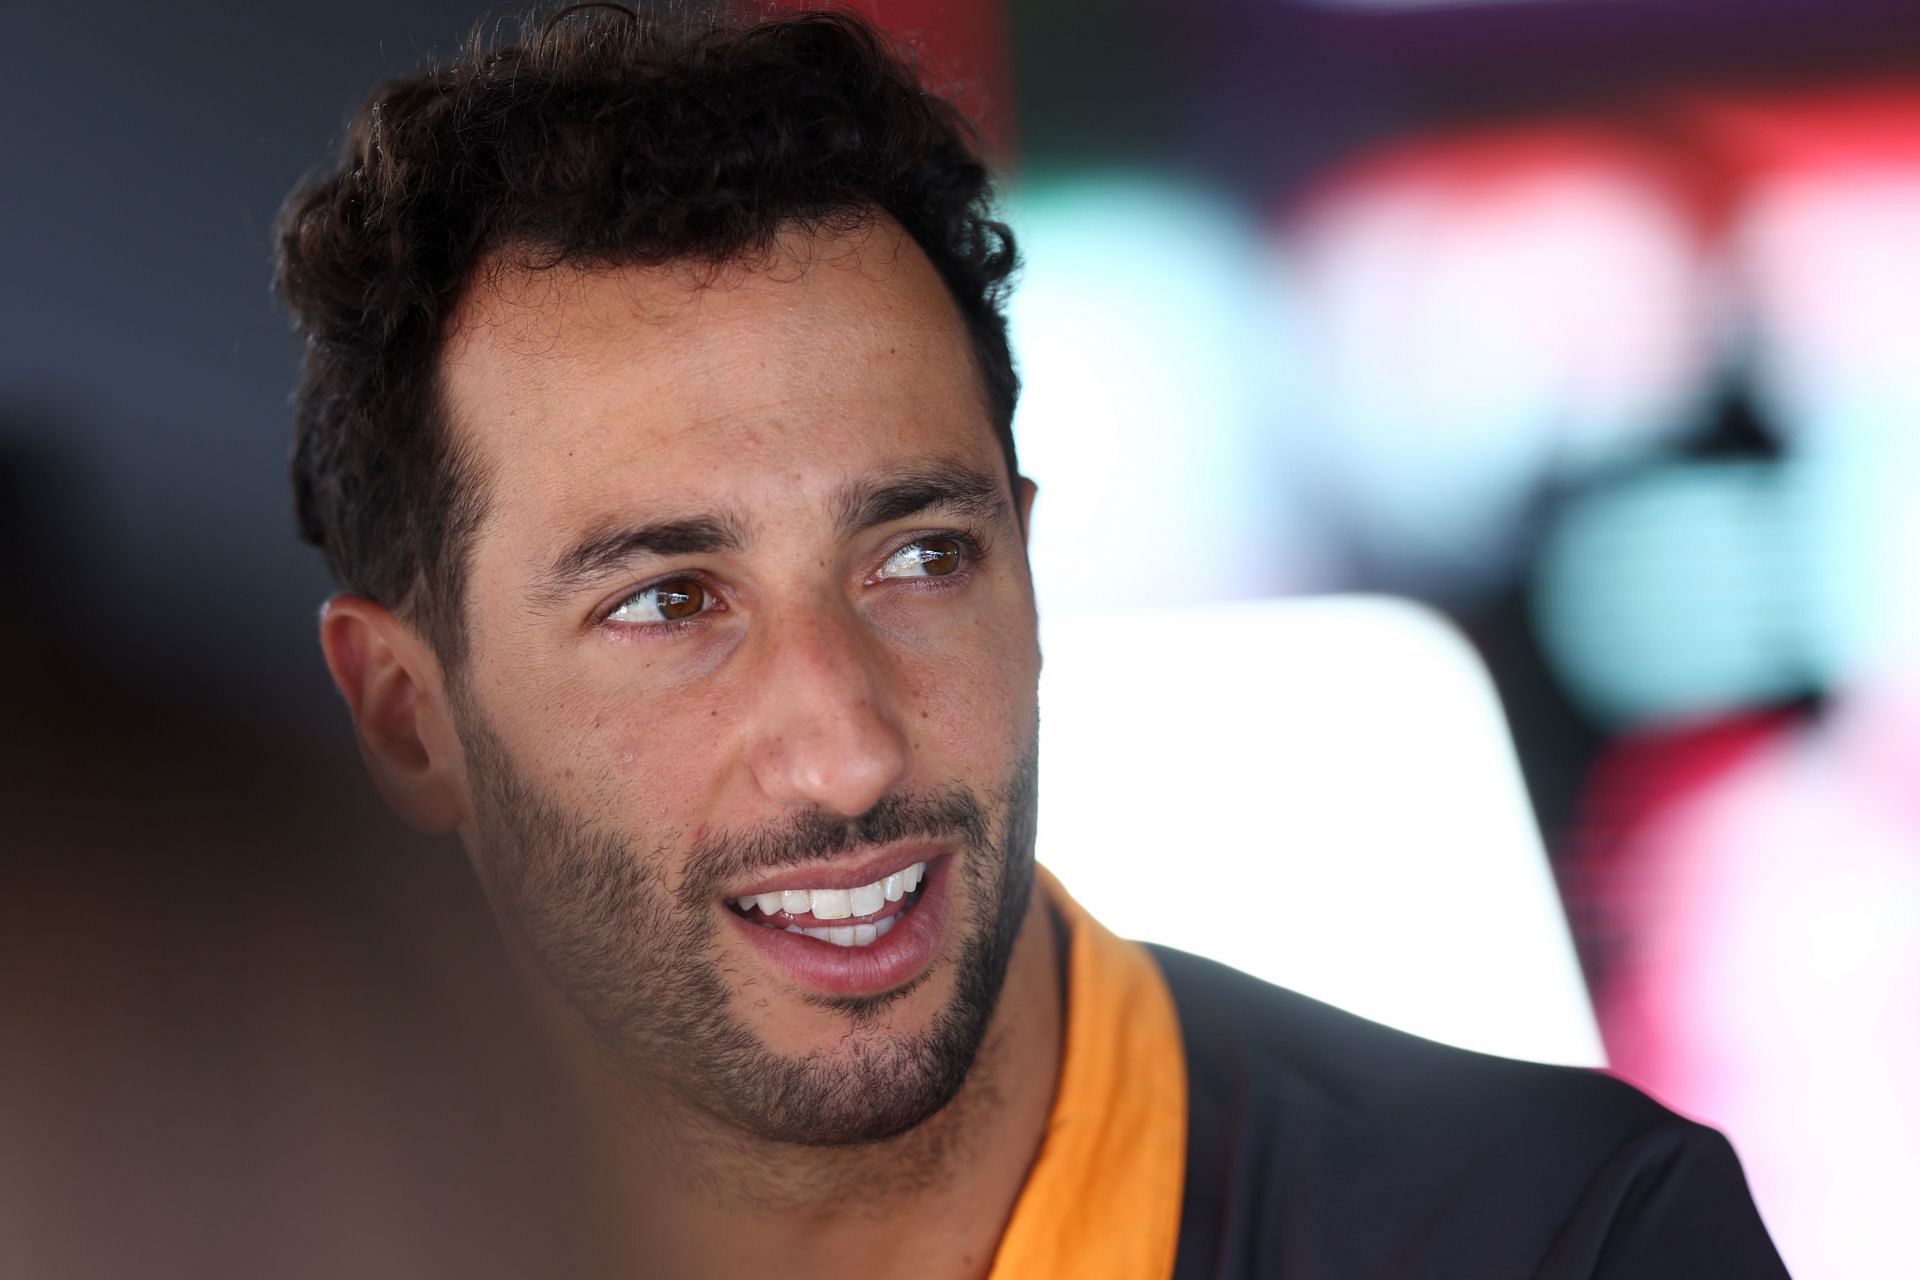 Daniel Ricciardo during the F1 Grand Prix of Spain - Practice